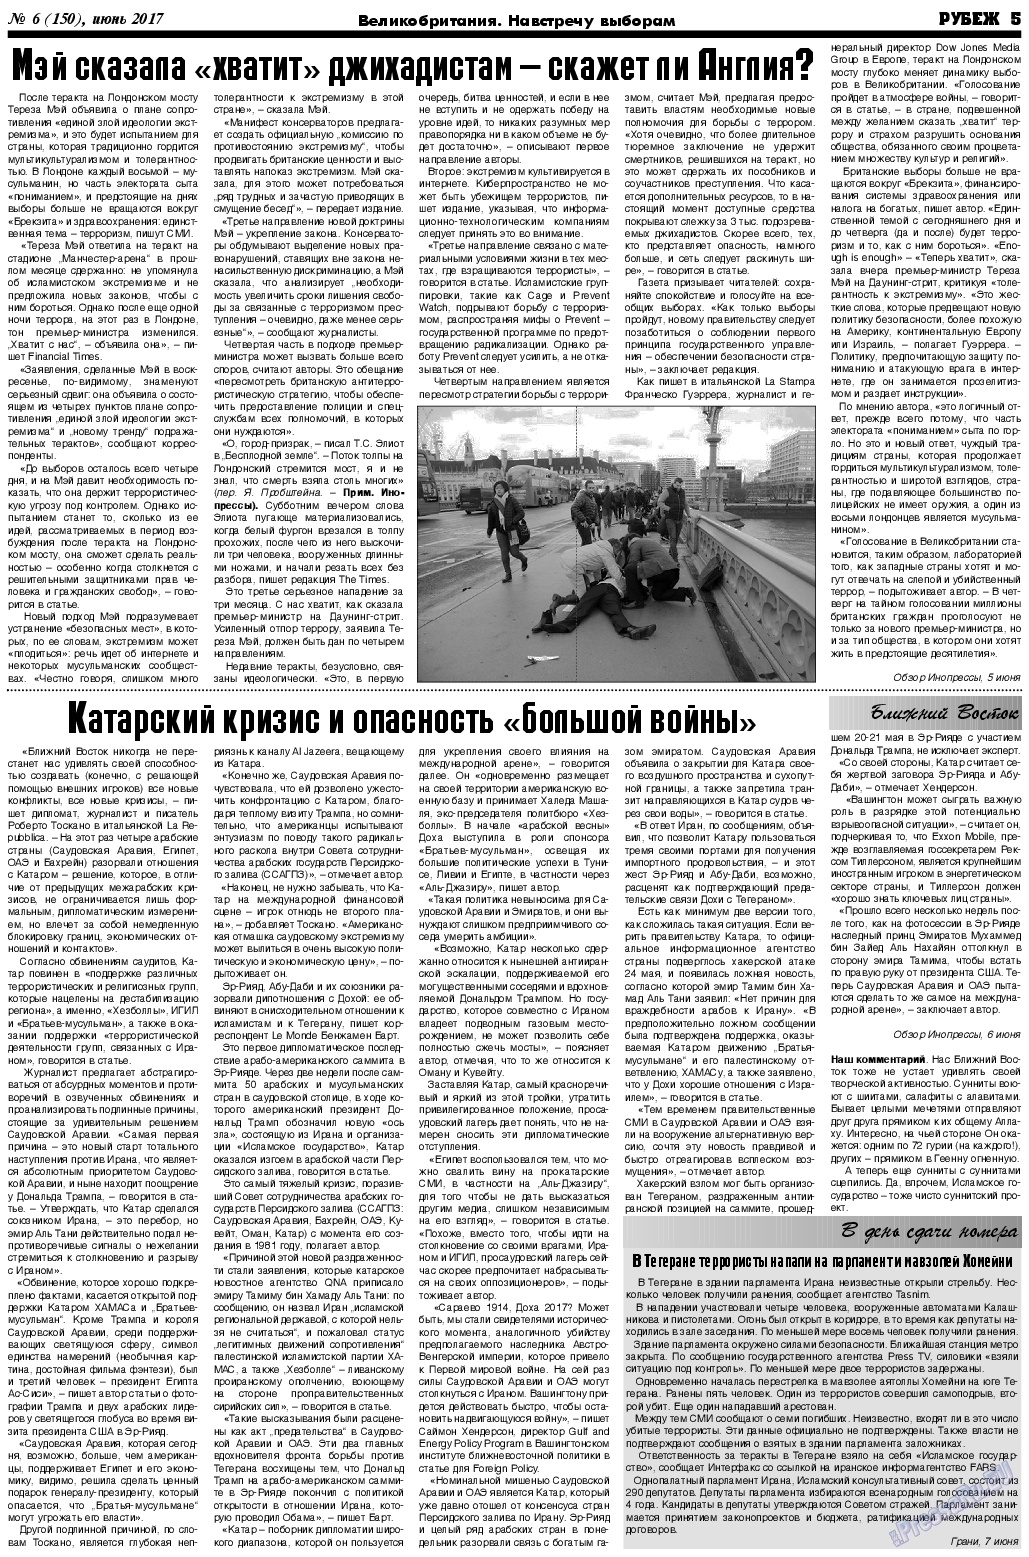 Рубеж, газета. 2017 №6 стр.5